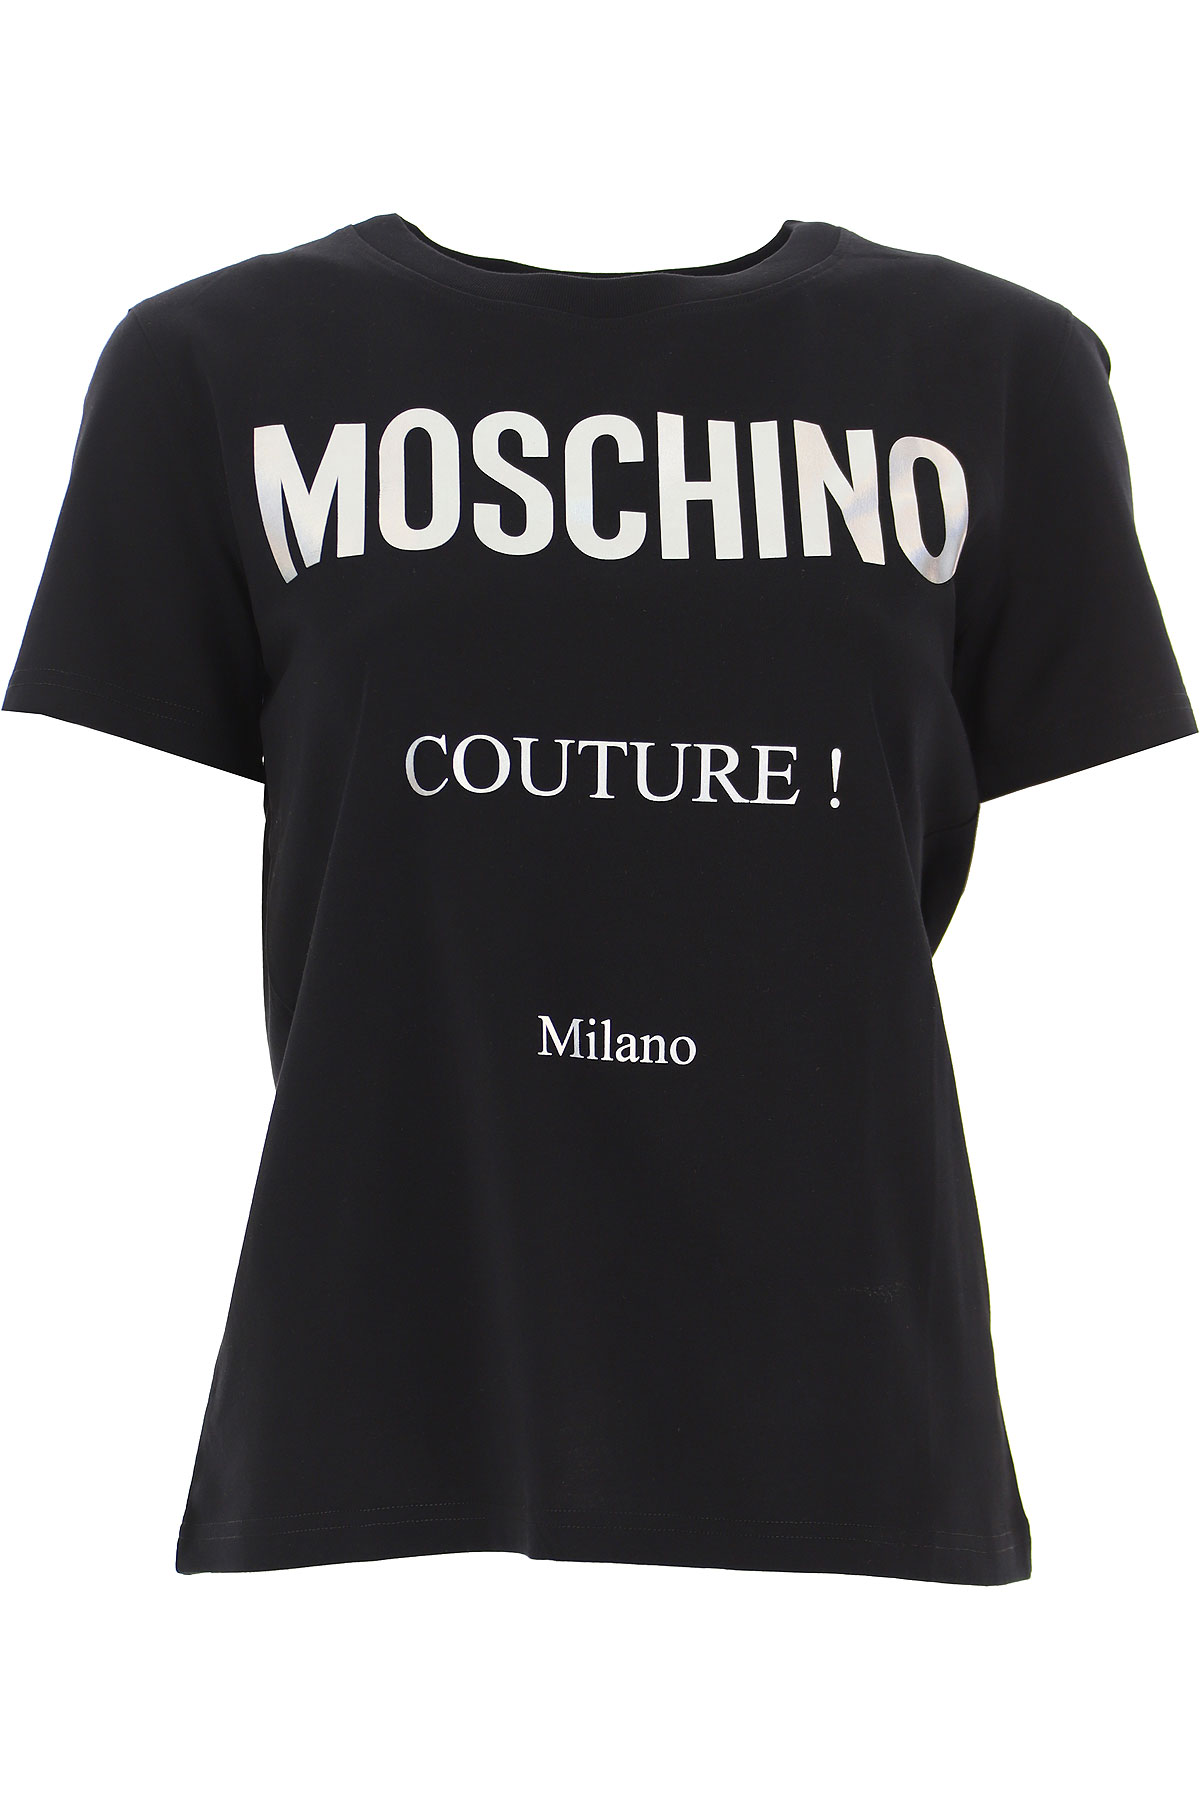 Womens Clothing Moschino, Style code: j0703-5540-1555